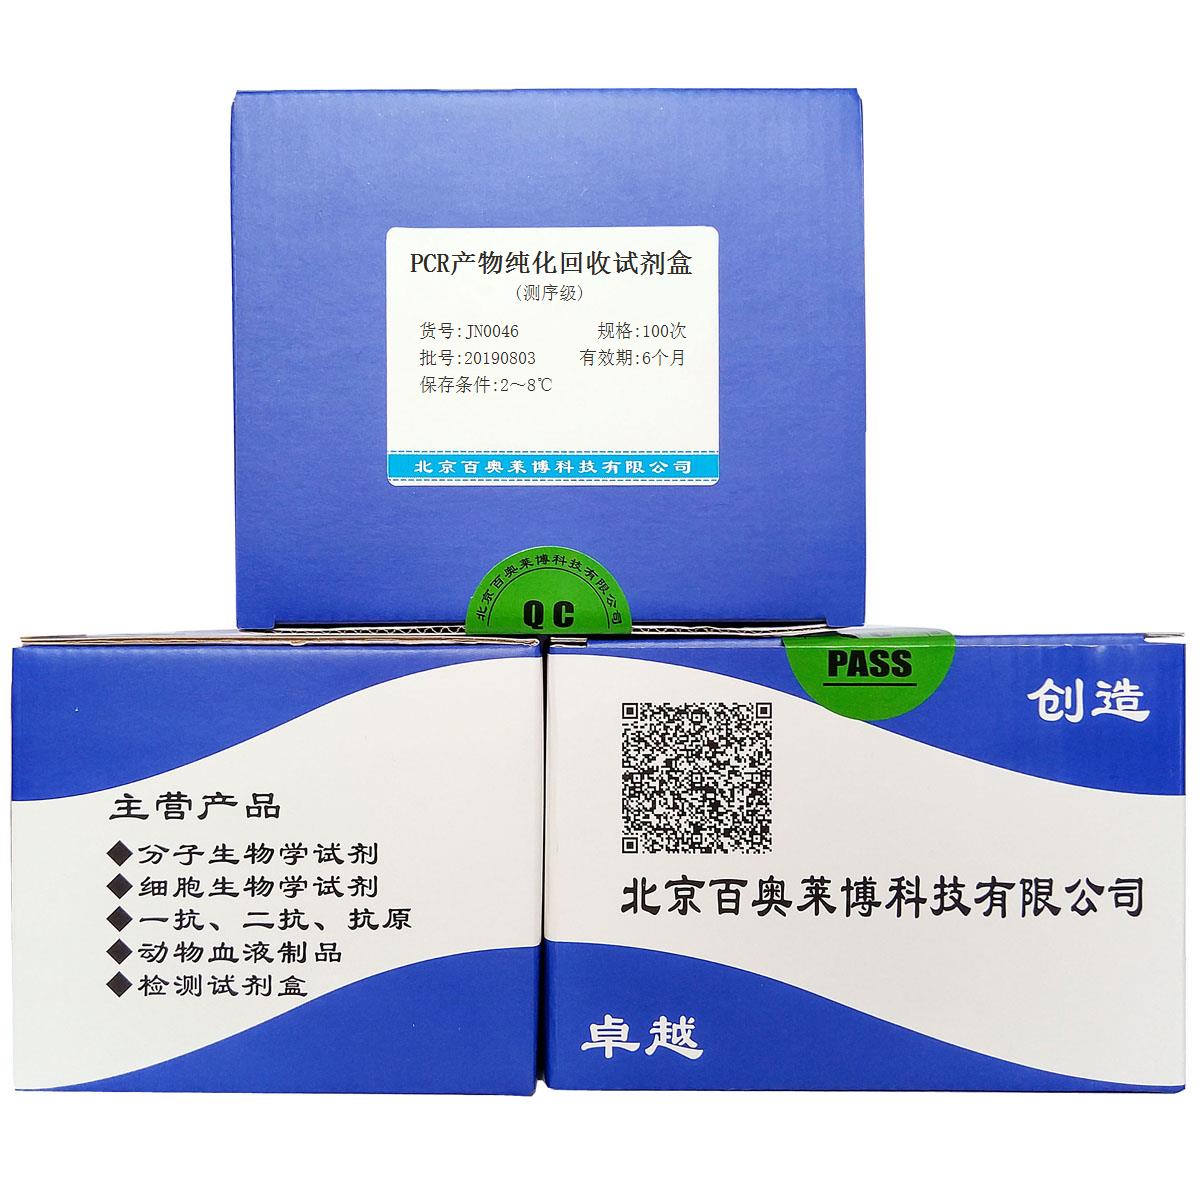 PCR产物纯化回收试剂盒(测序级)现货供应